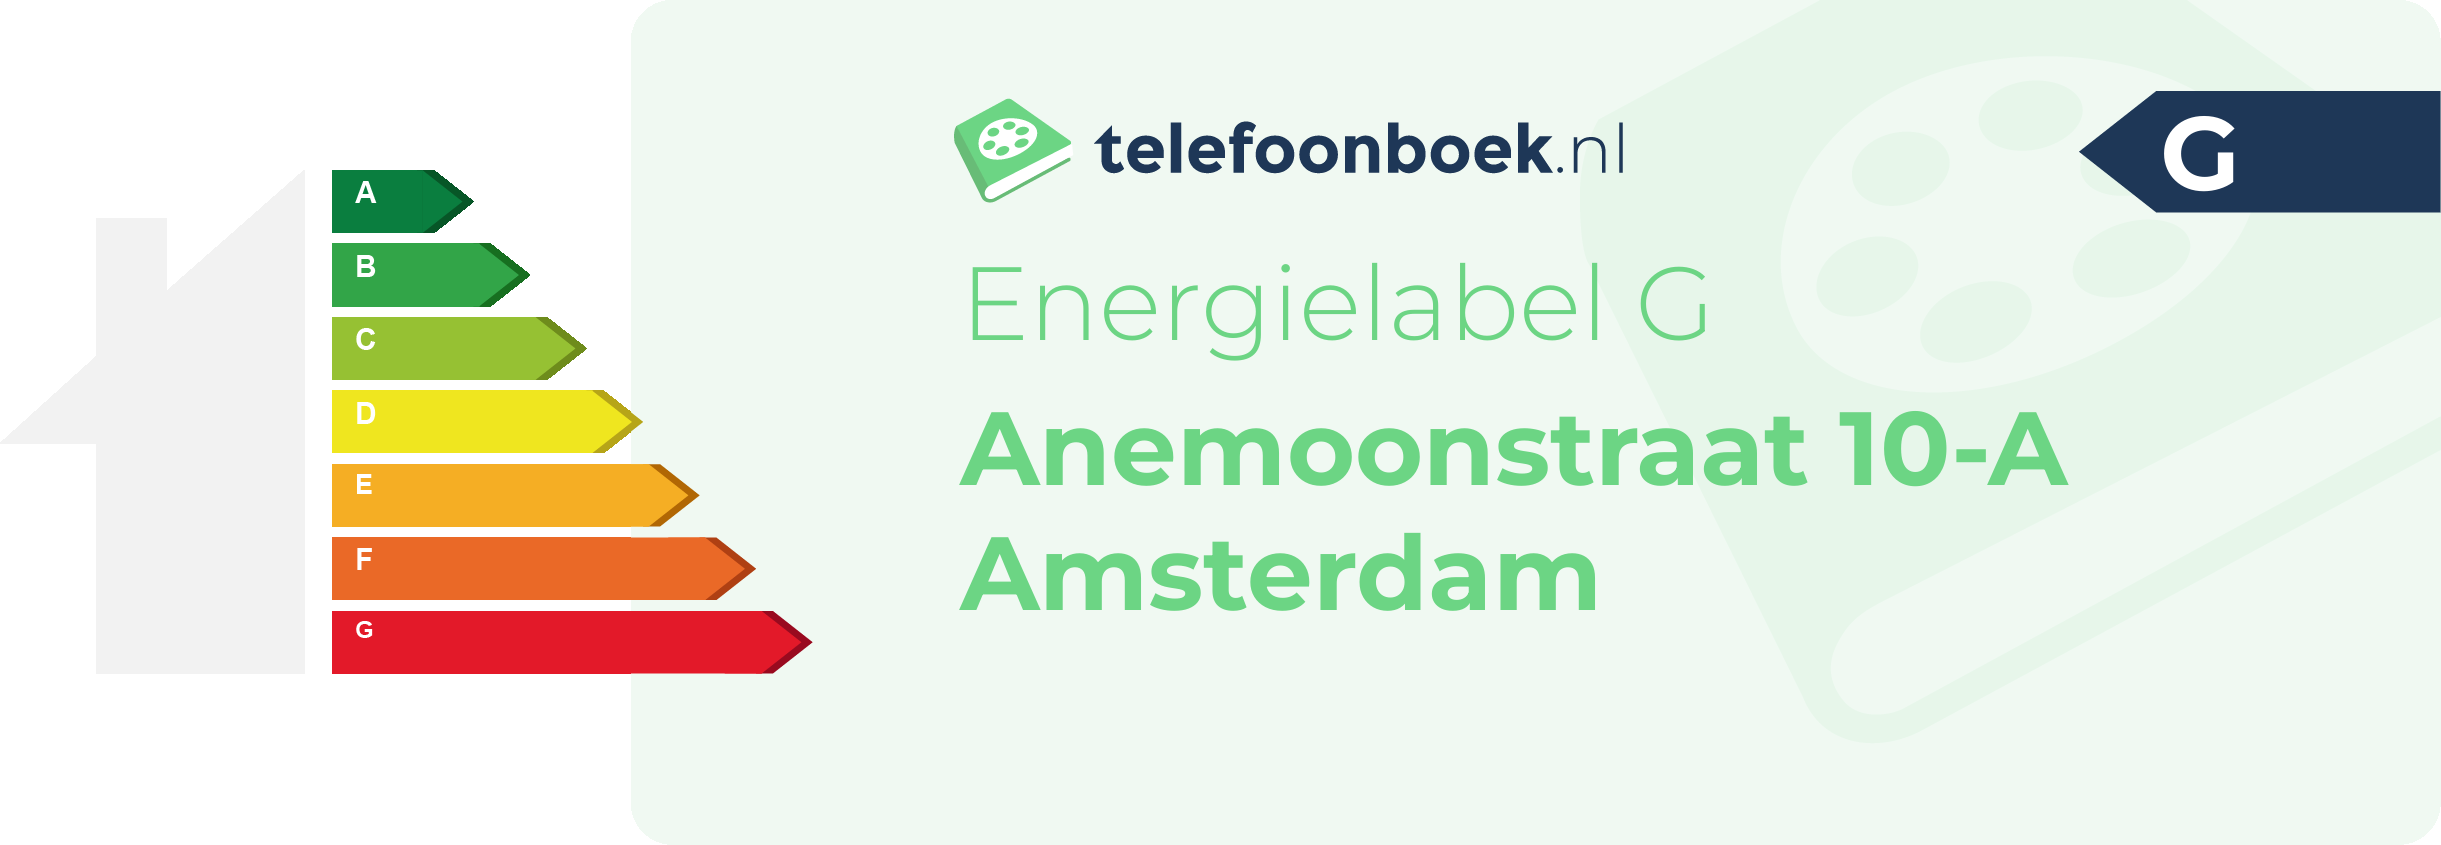 Energielabel Anemoonstraat 10-A Amsterdam